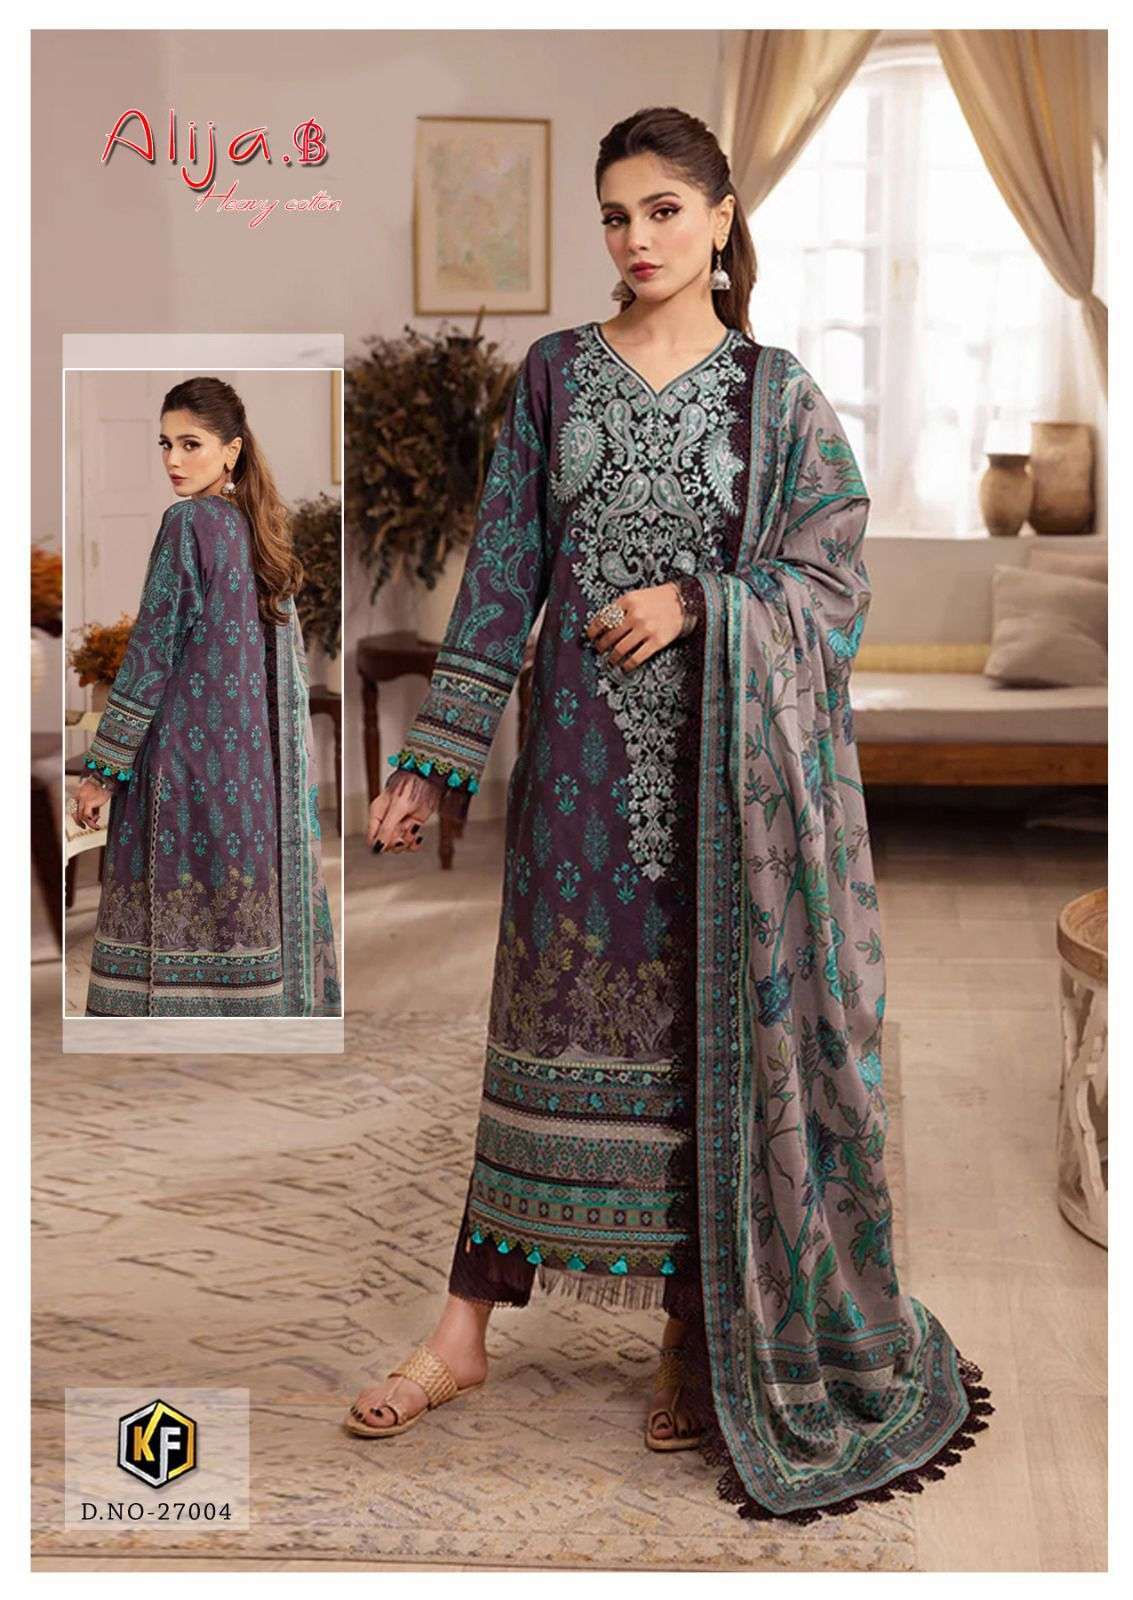 Keval Alija B Vol 27 Heavy Cotton Luxury Surat dress material market online shopping